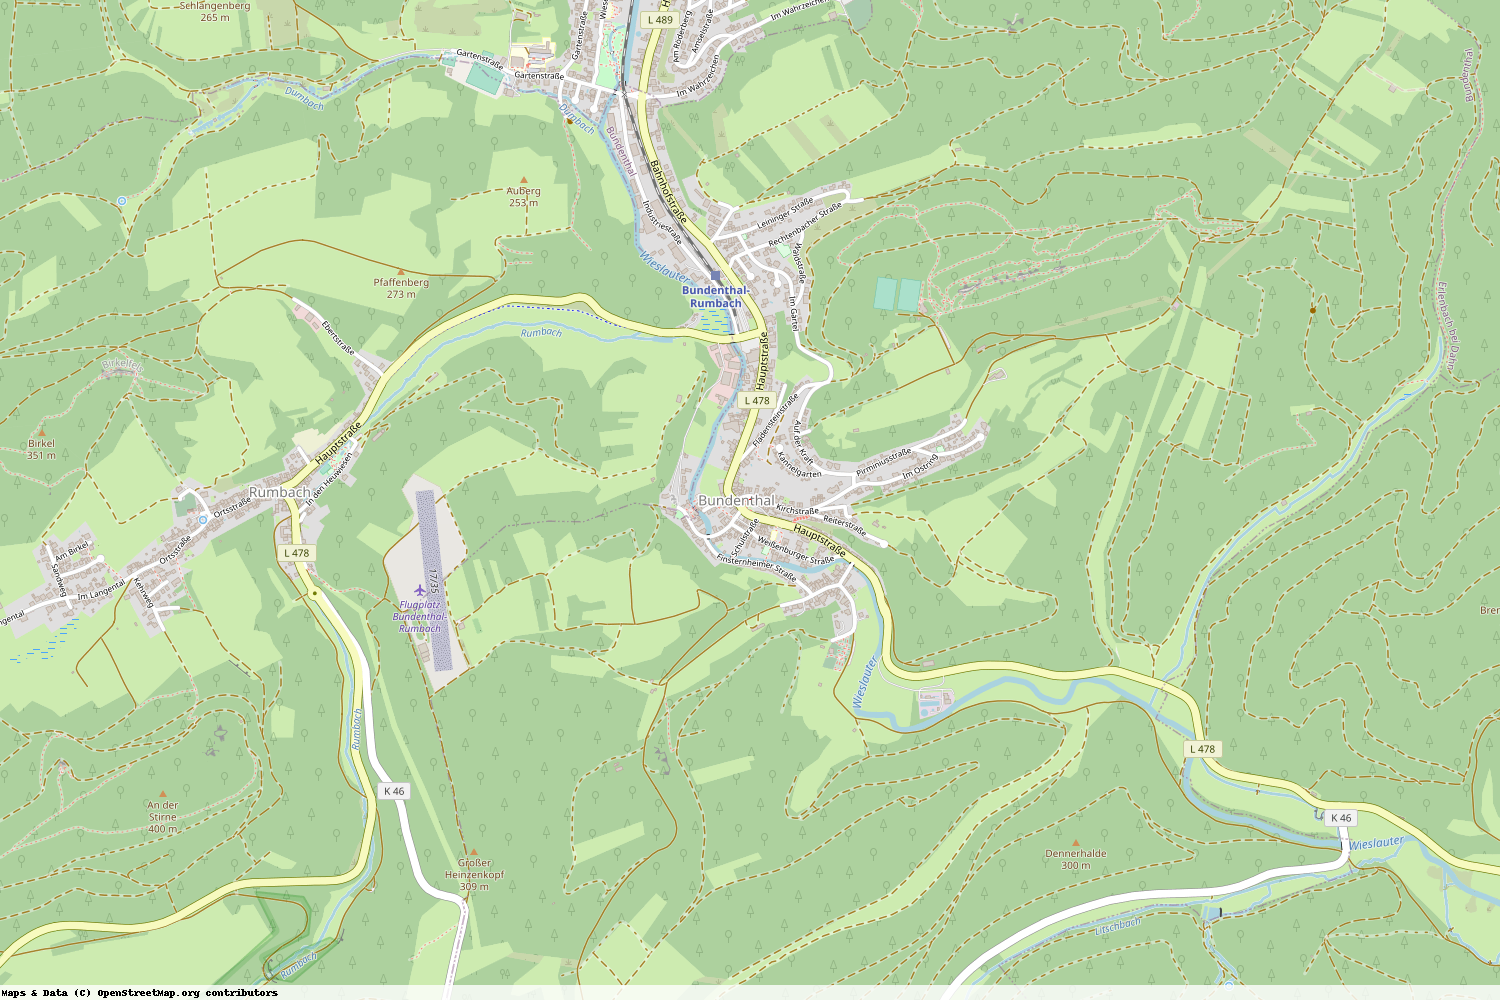 Ist gerade Stromausfall in Rheinland-Pfalz - Südwestpfalz - Bundenthal?